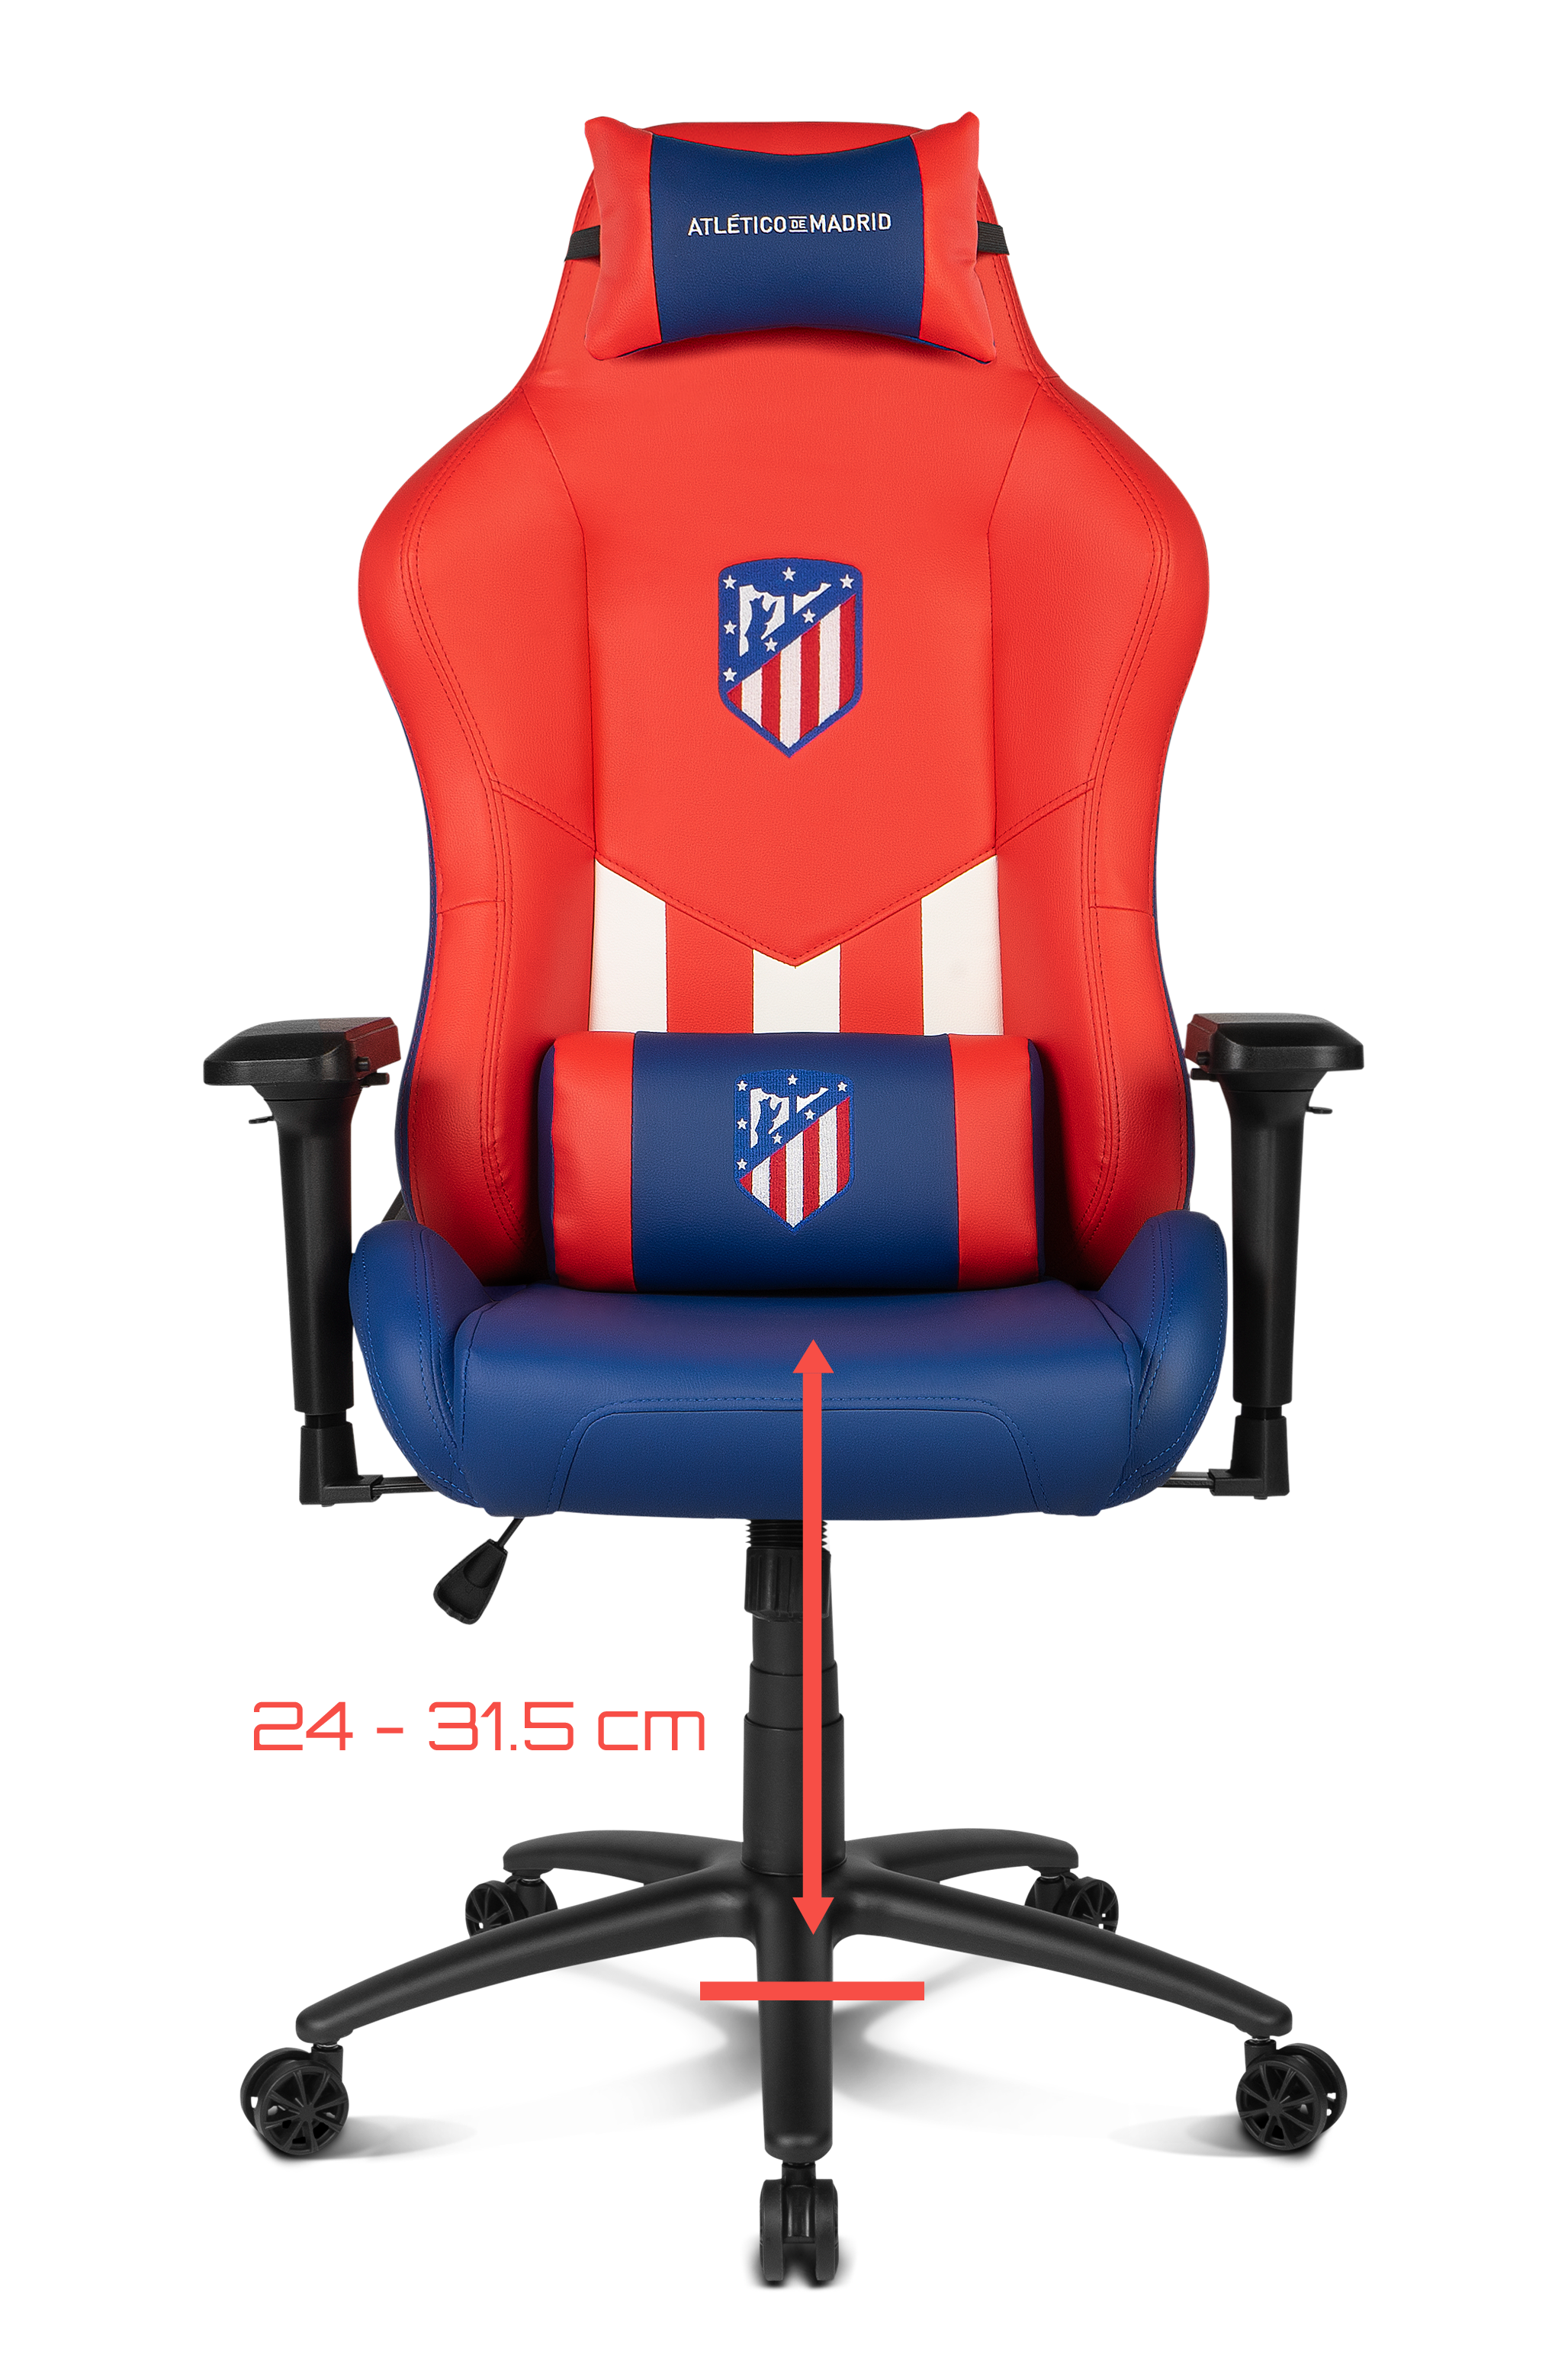 Drift Atlético de Madrid